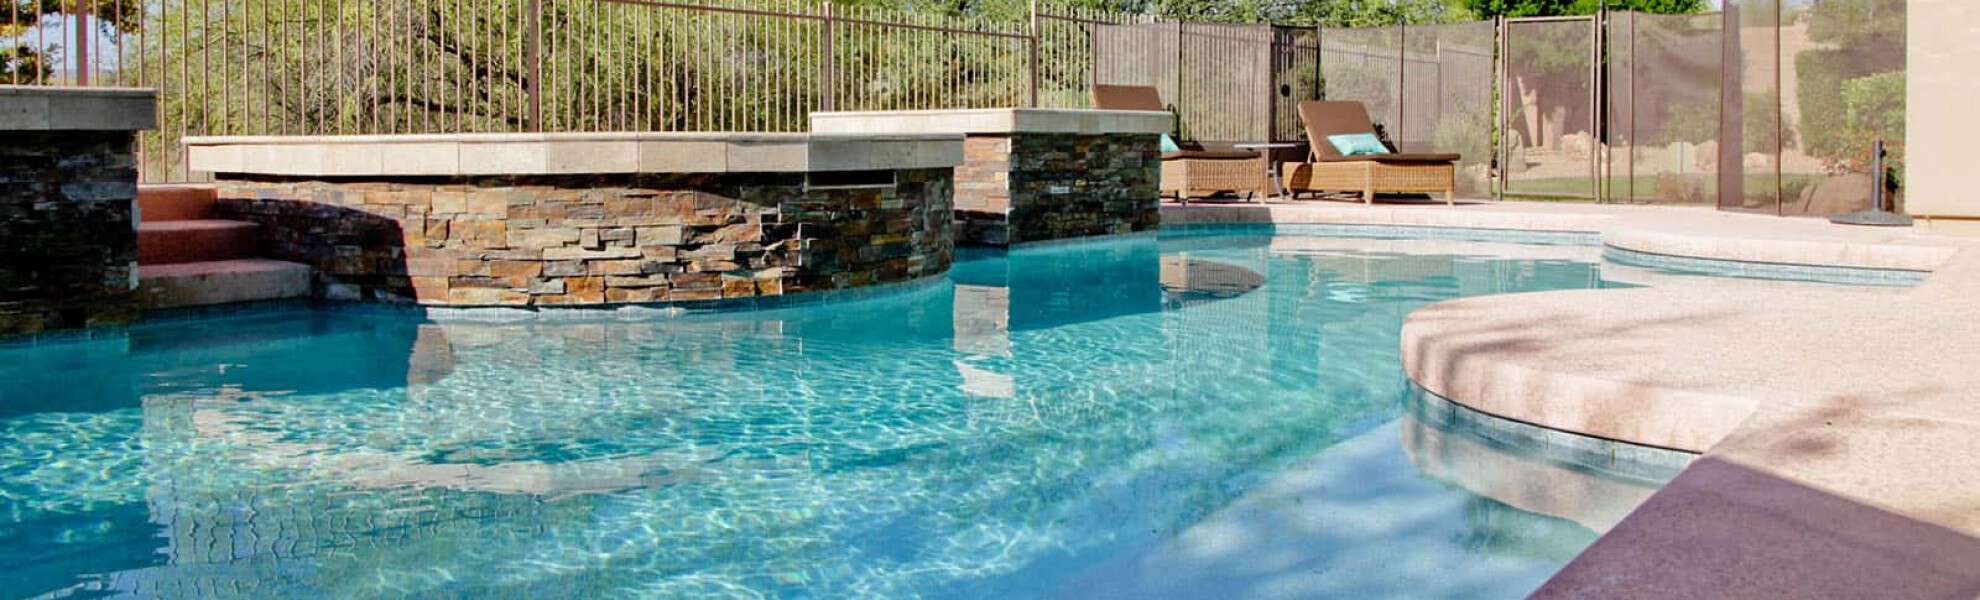 Alfonsi Swimming Pool Remodel | After Photo | Shasta Pools & Spas